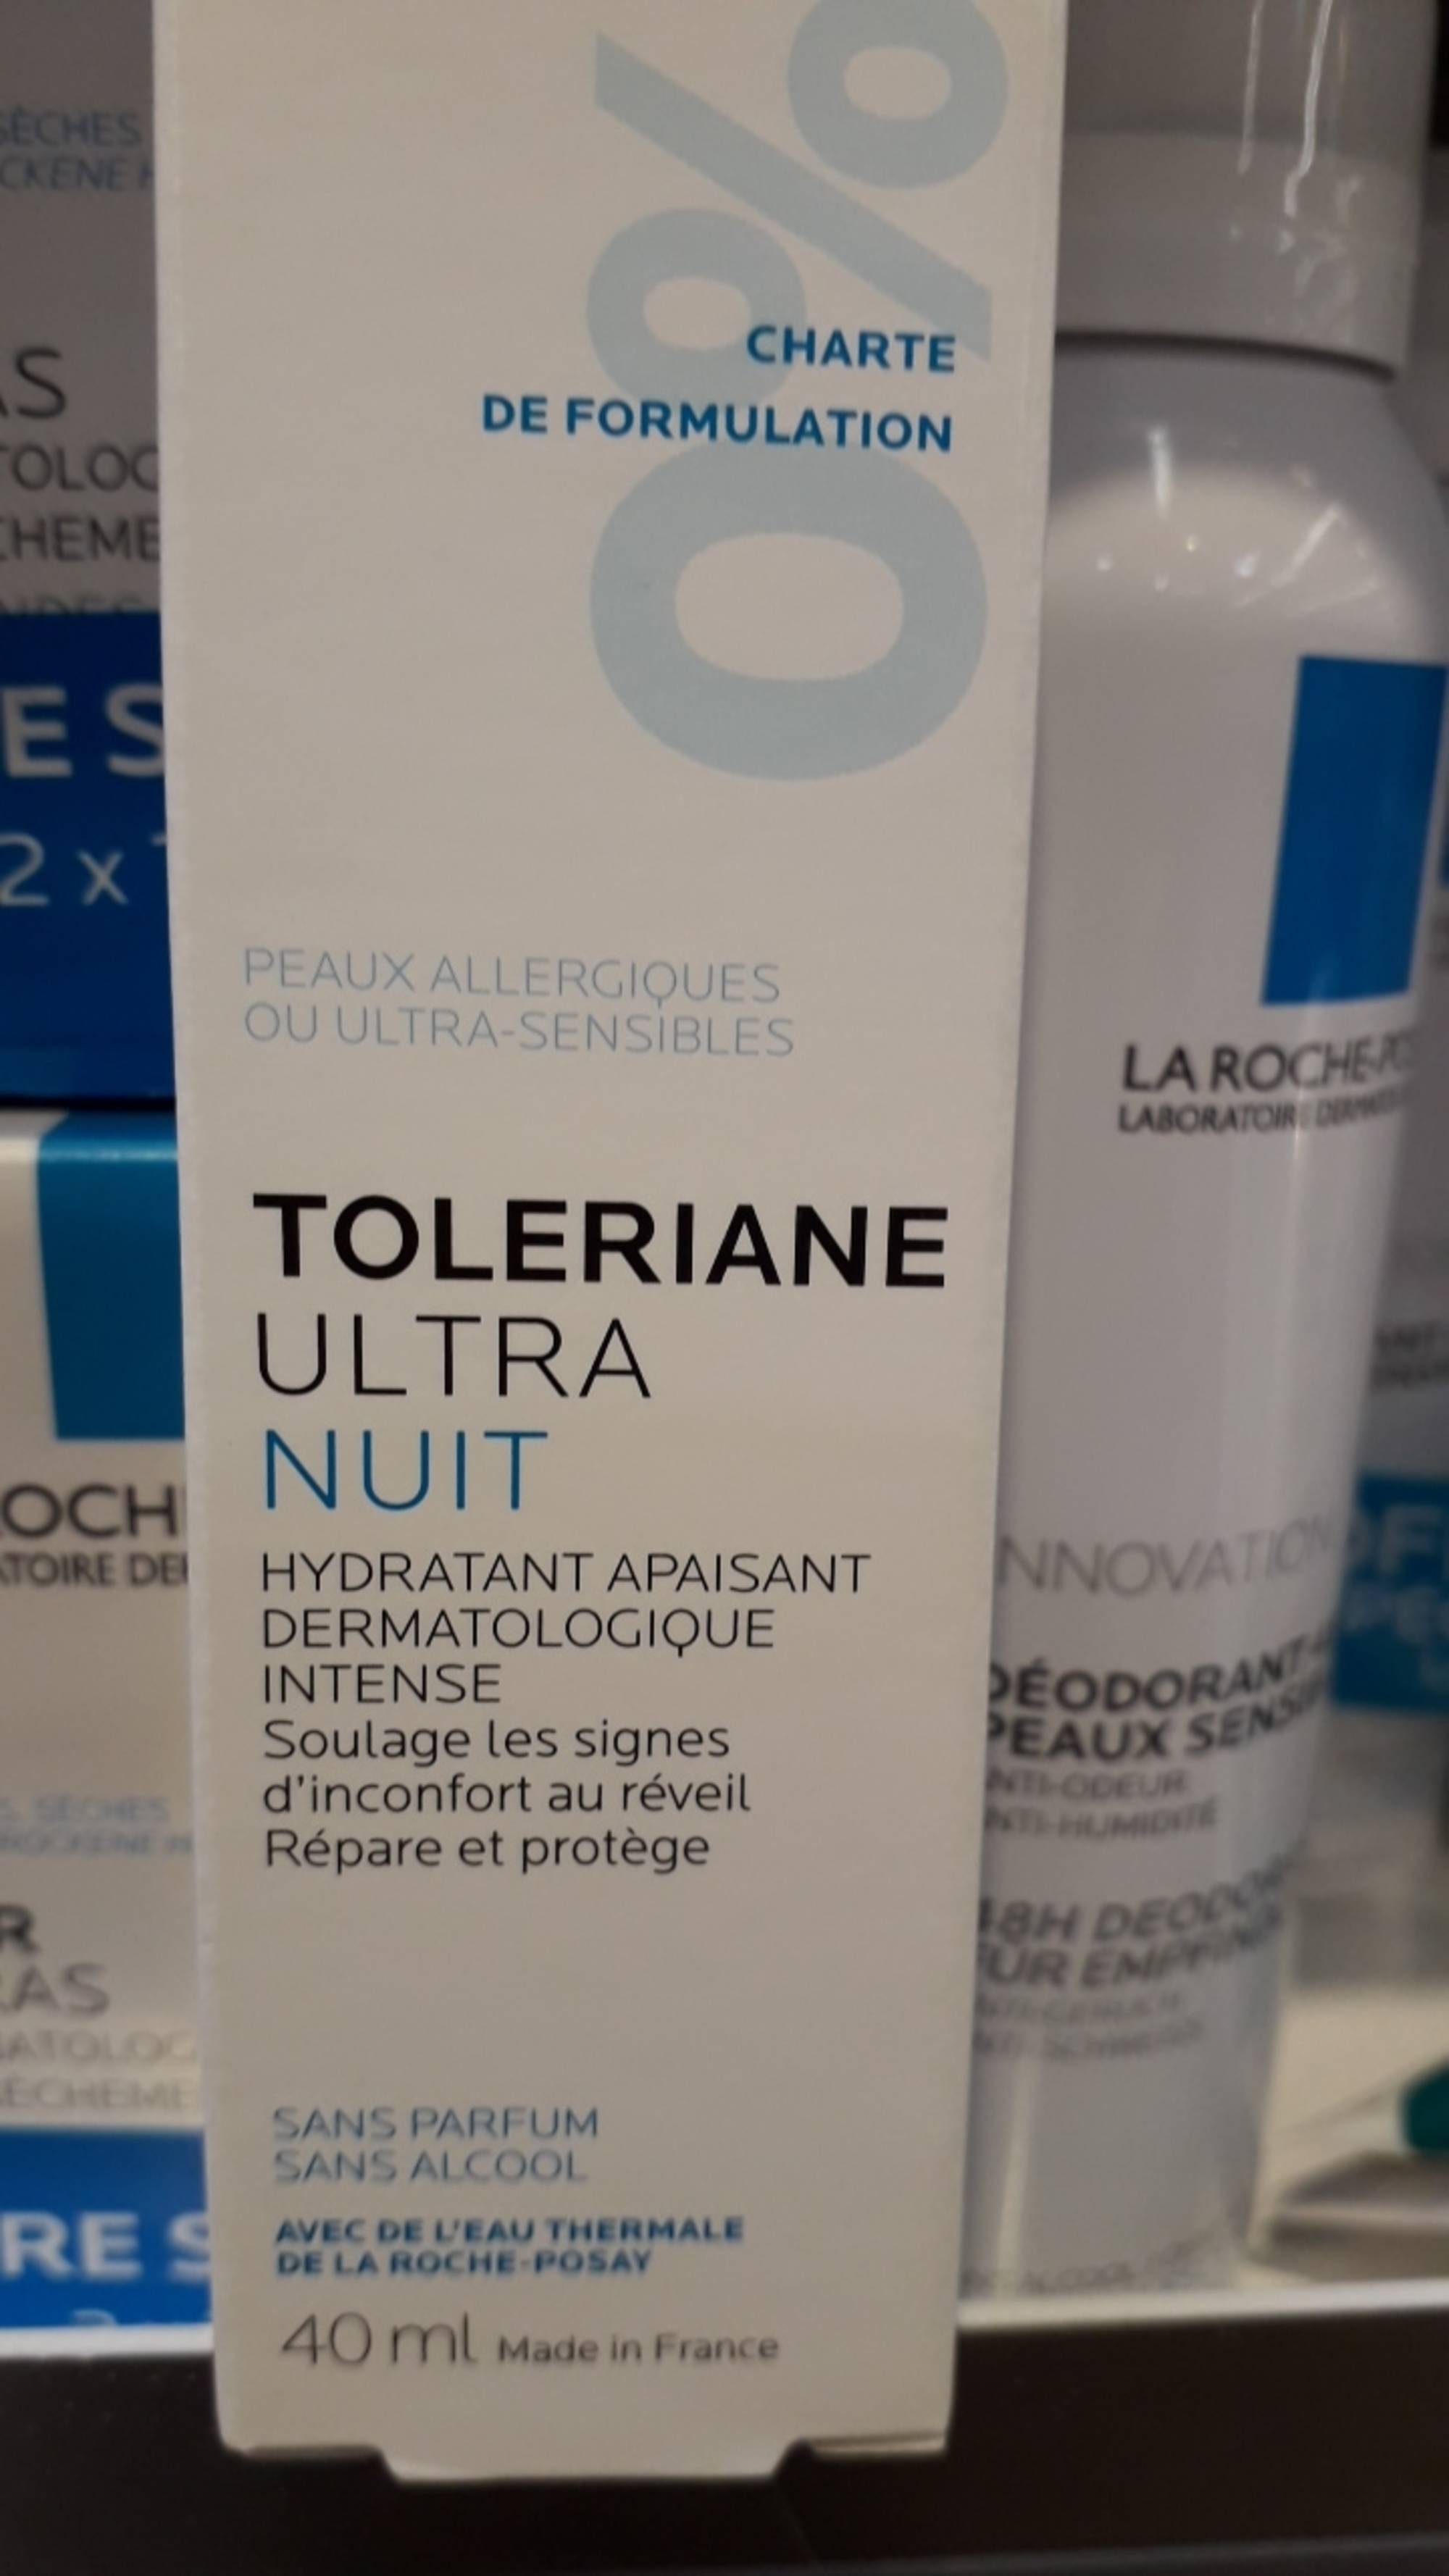 LA ROCHE-POSAY - Toleriane ultra nuit - Hydratant apaisant dermatologique intense